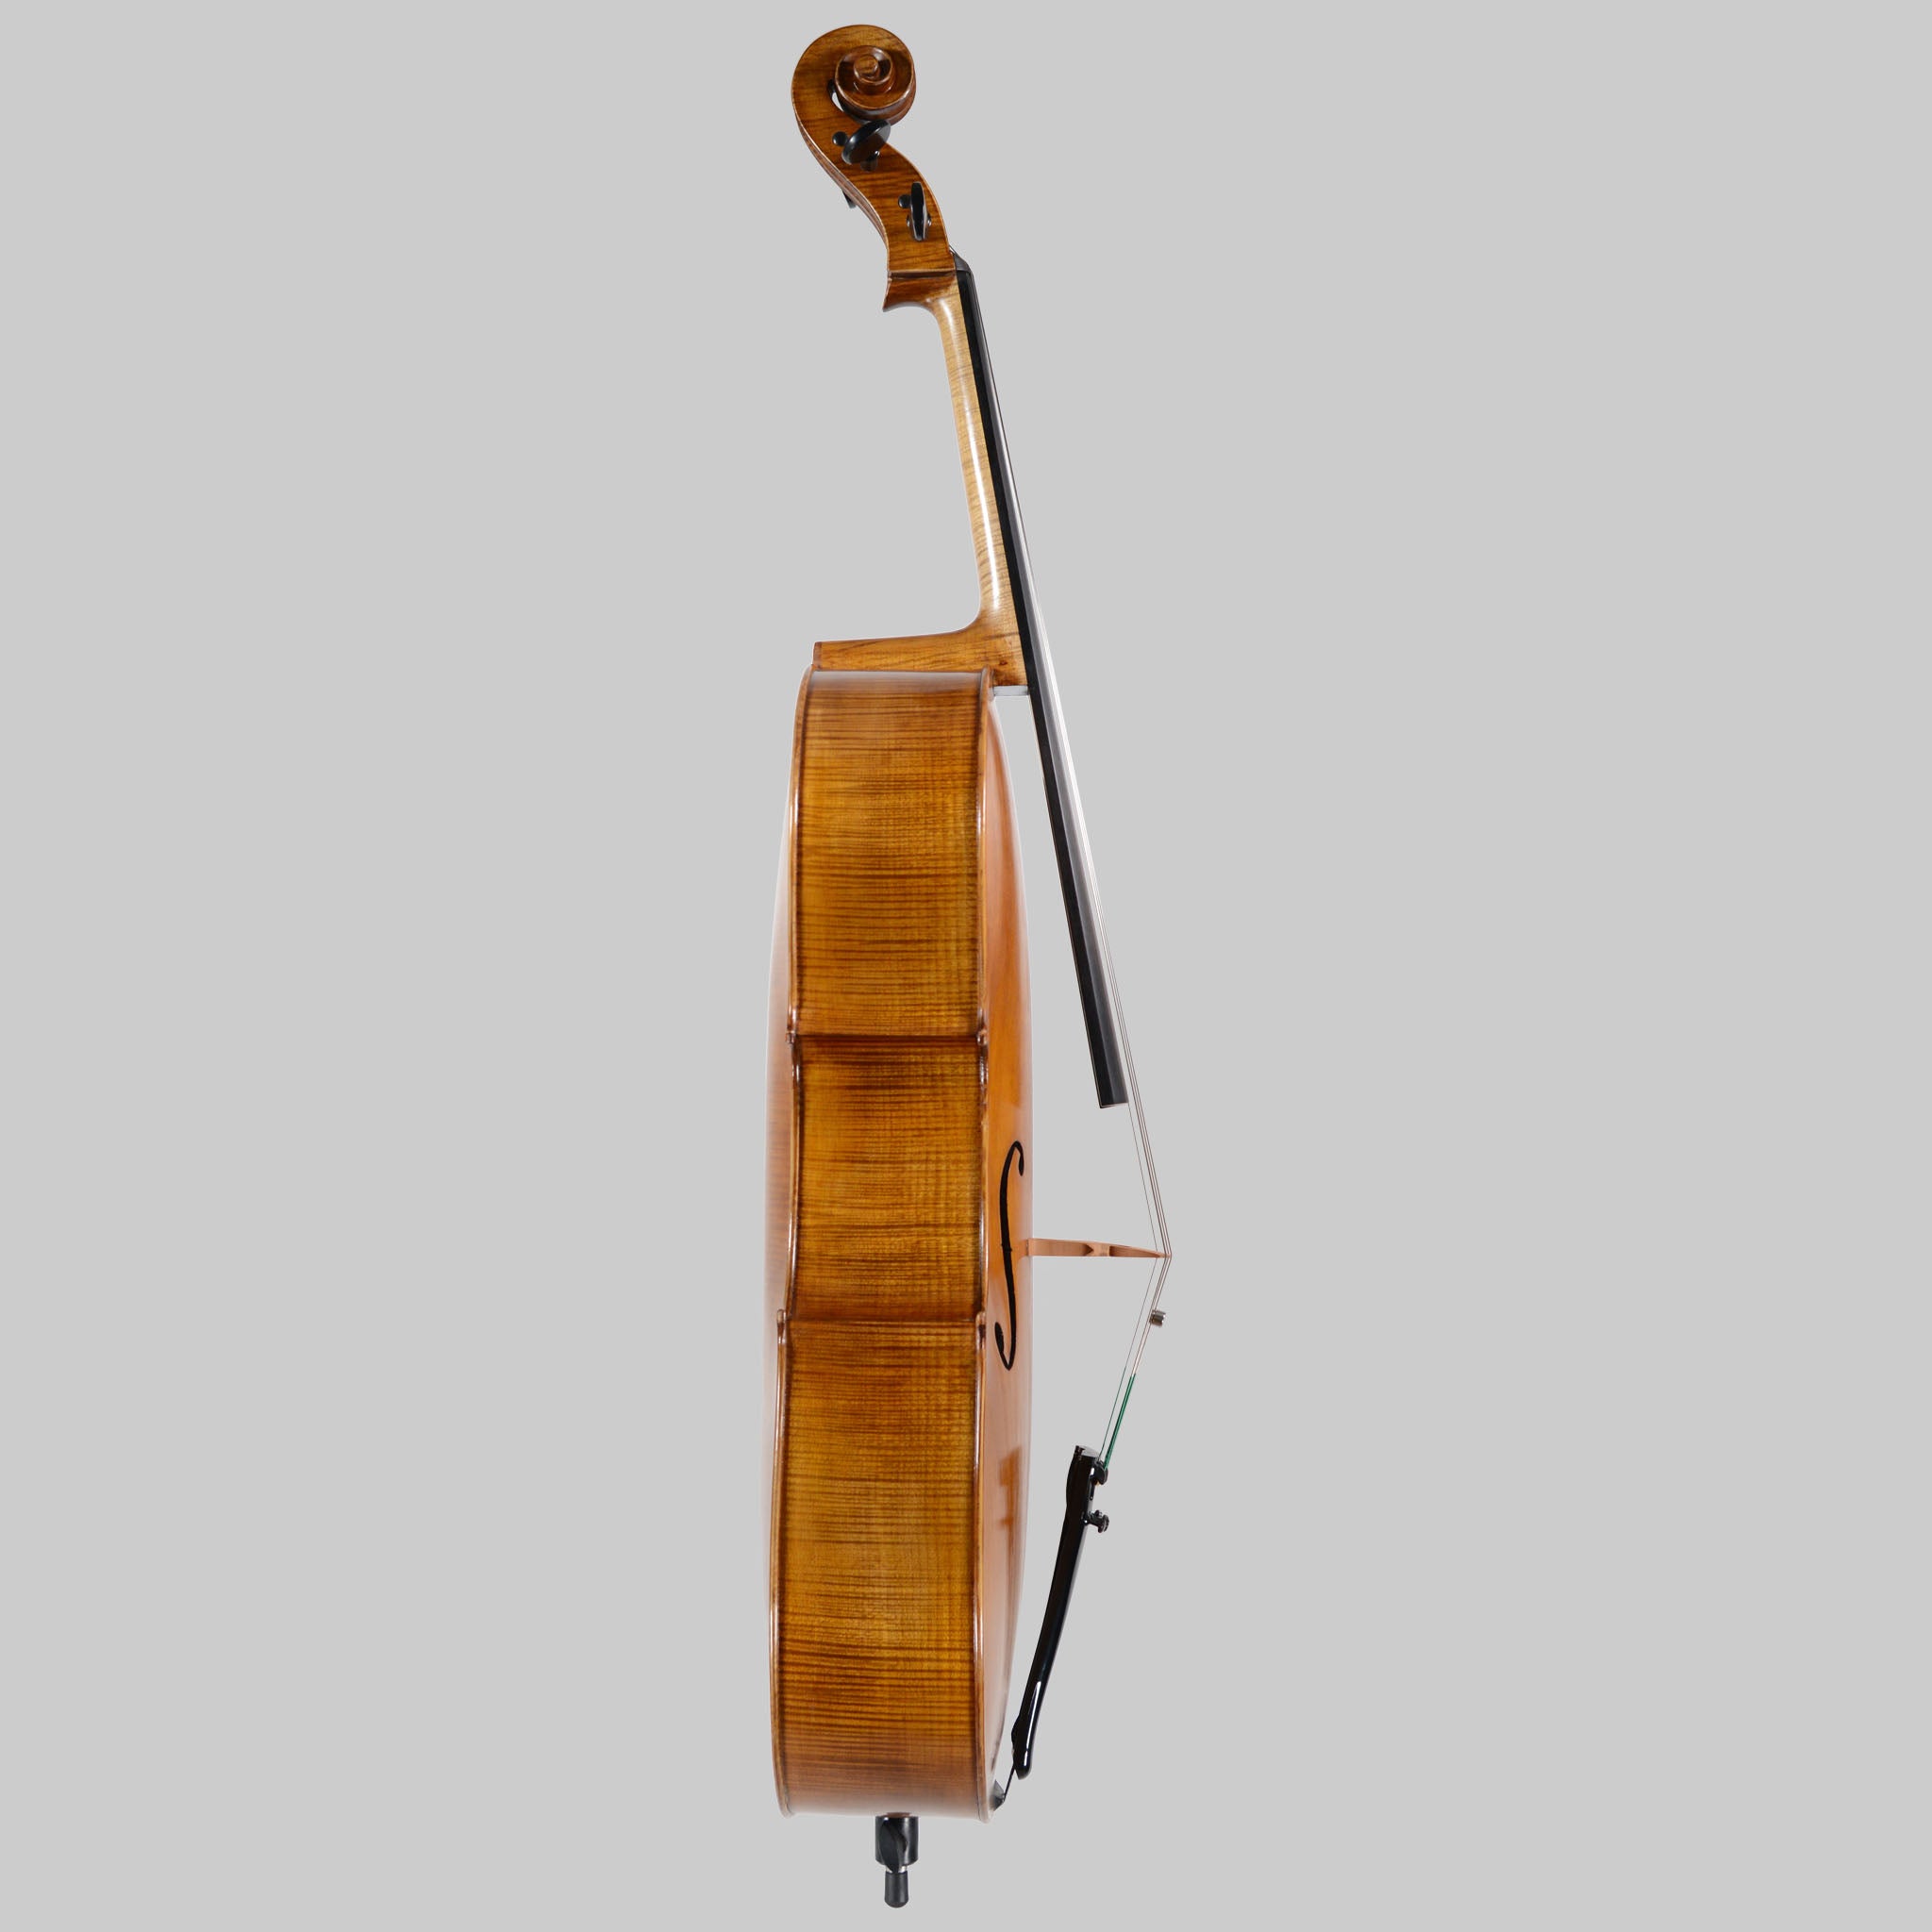 Alexandru Ozon, Bucharest 2008, Stradivarius 'Davidov' Cello